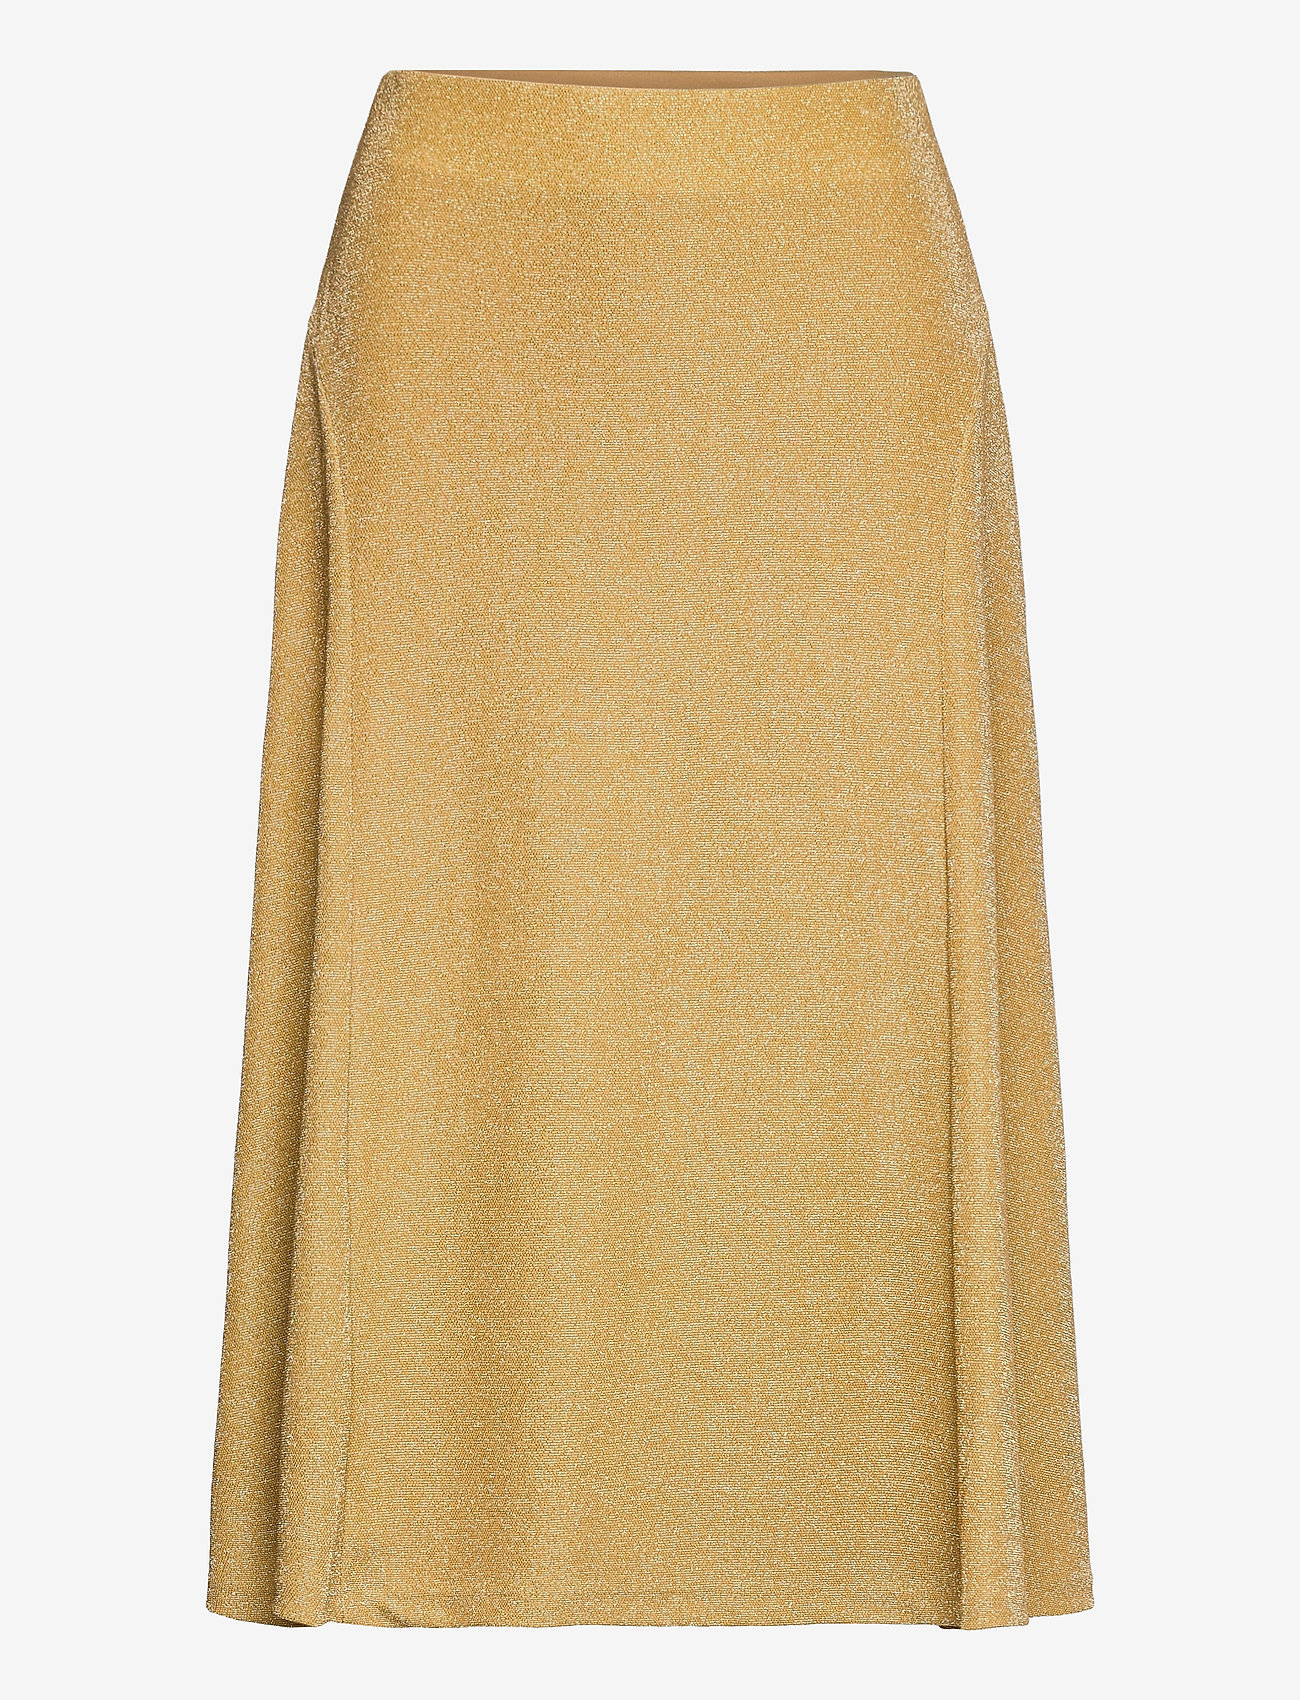 Metallic Double-Knit Jacquard Skirt